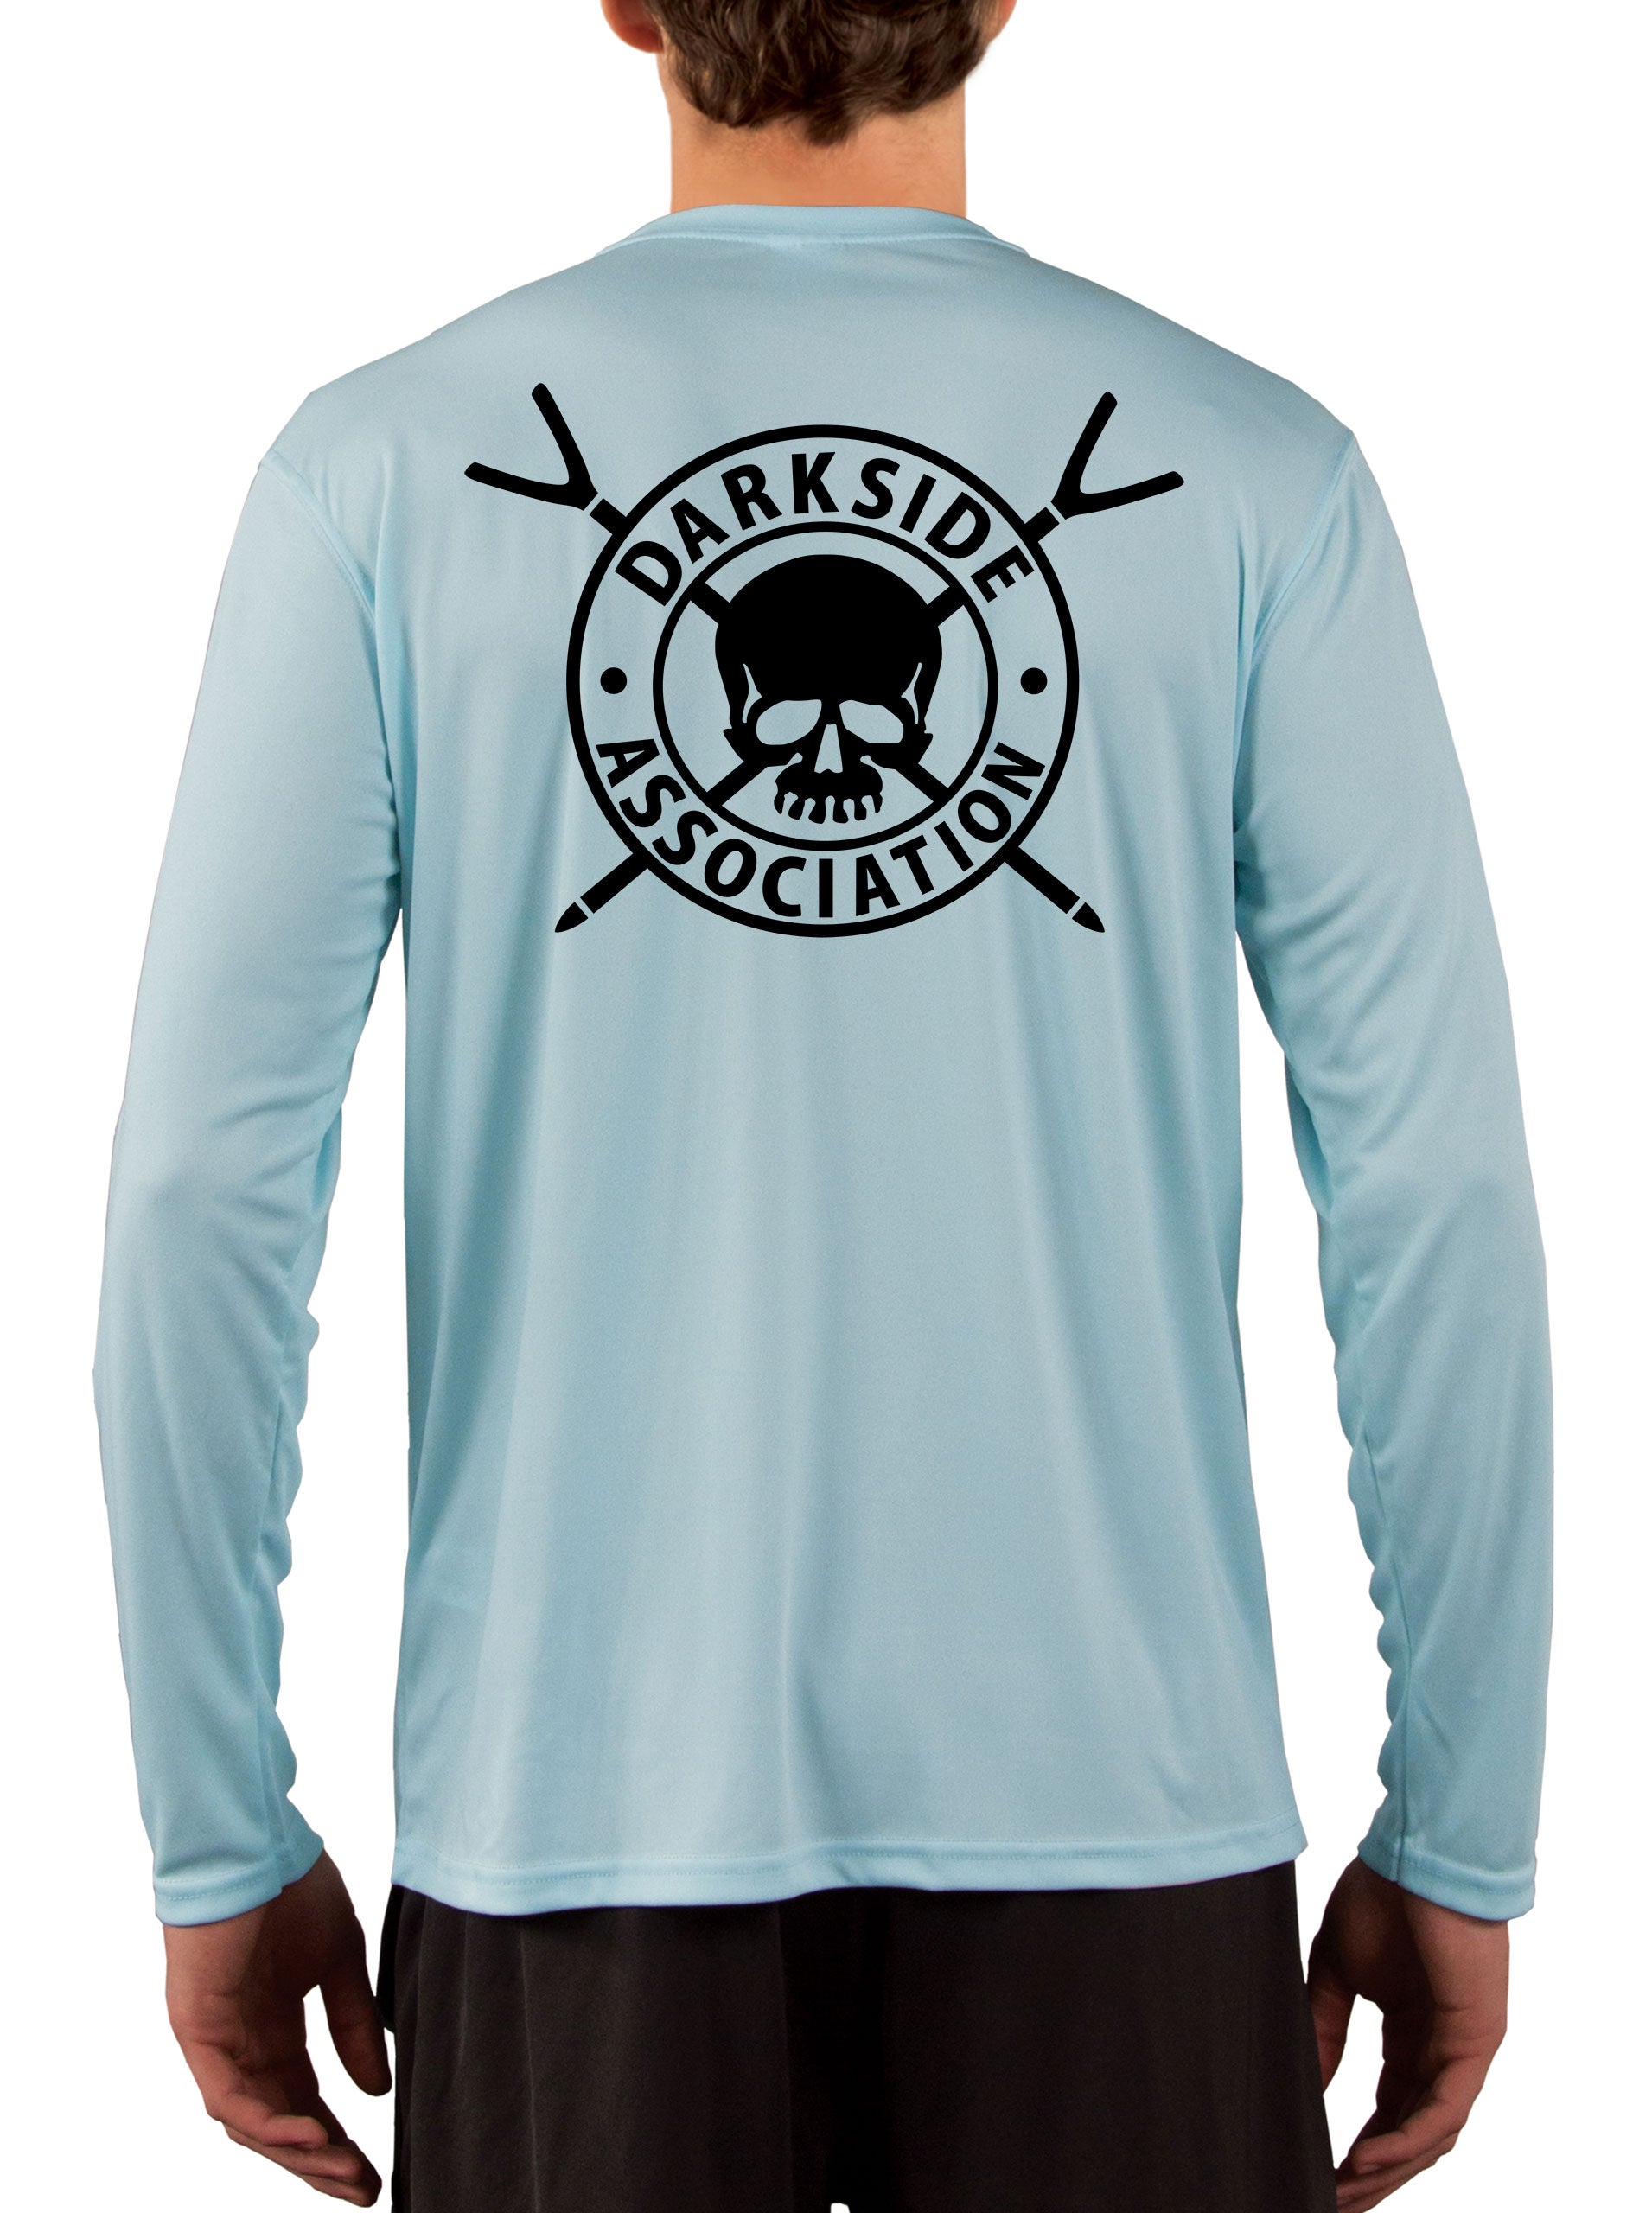 Darkside Association Skiff Fishing Shirts for Men Extra Large / Ice Blue